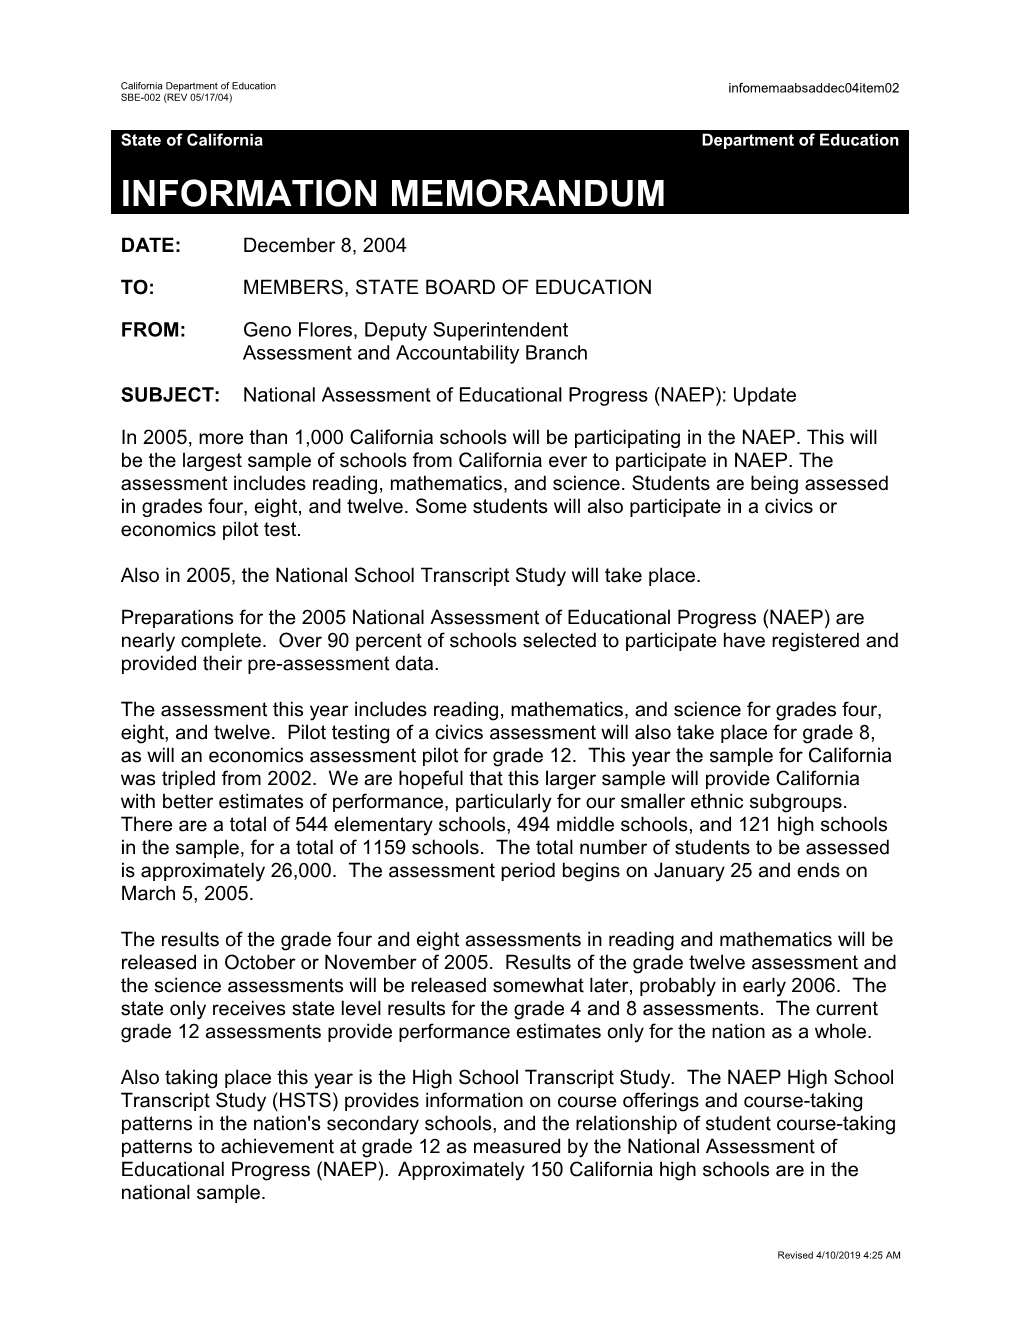 December 2004 SAD Item 2 - Information Memorandum (CA State Board of Education)